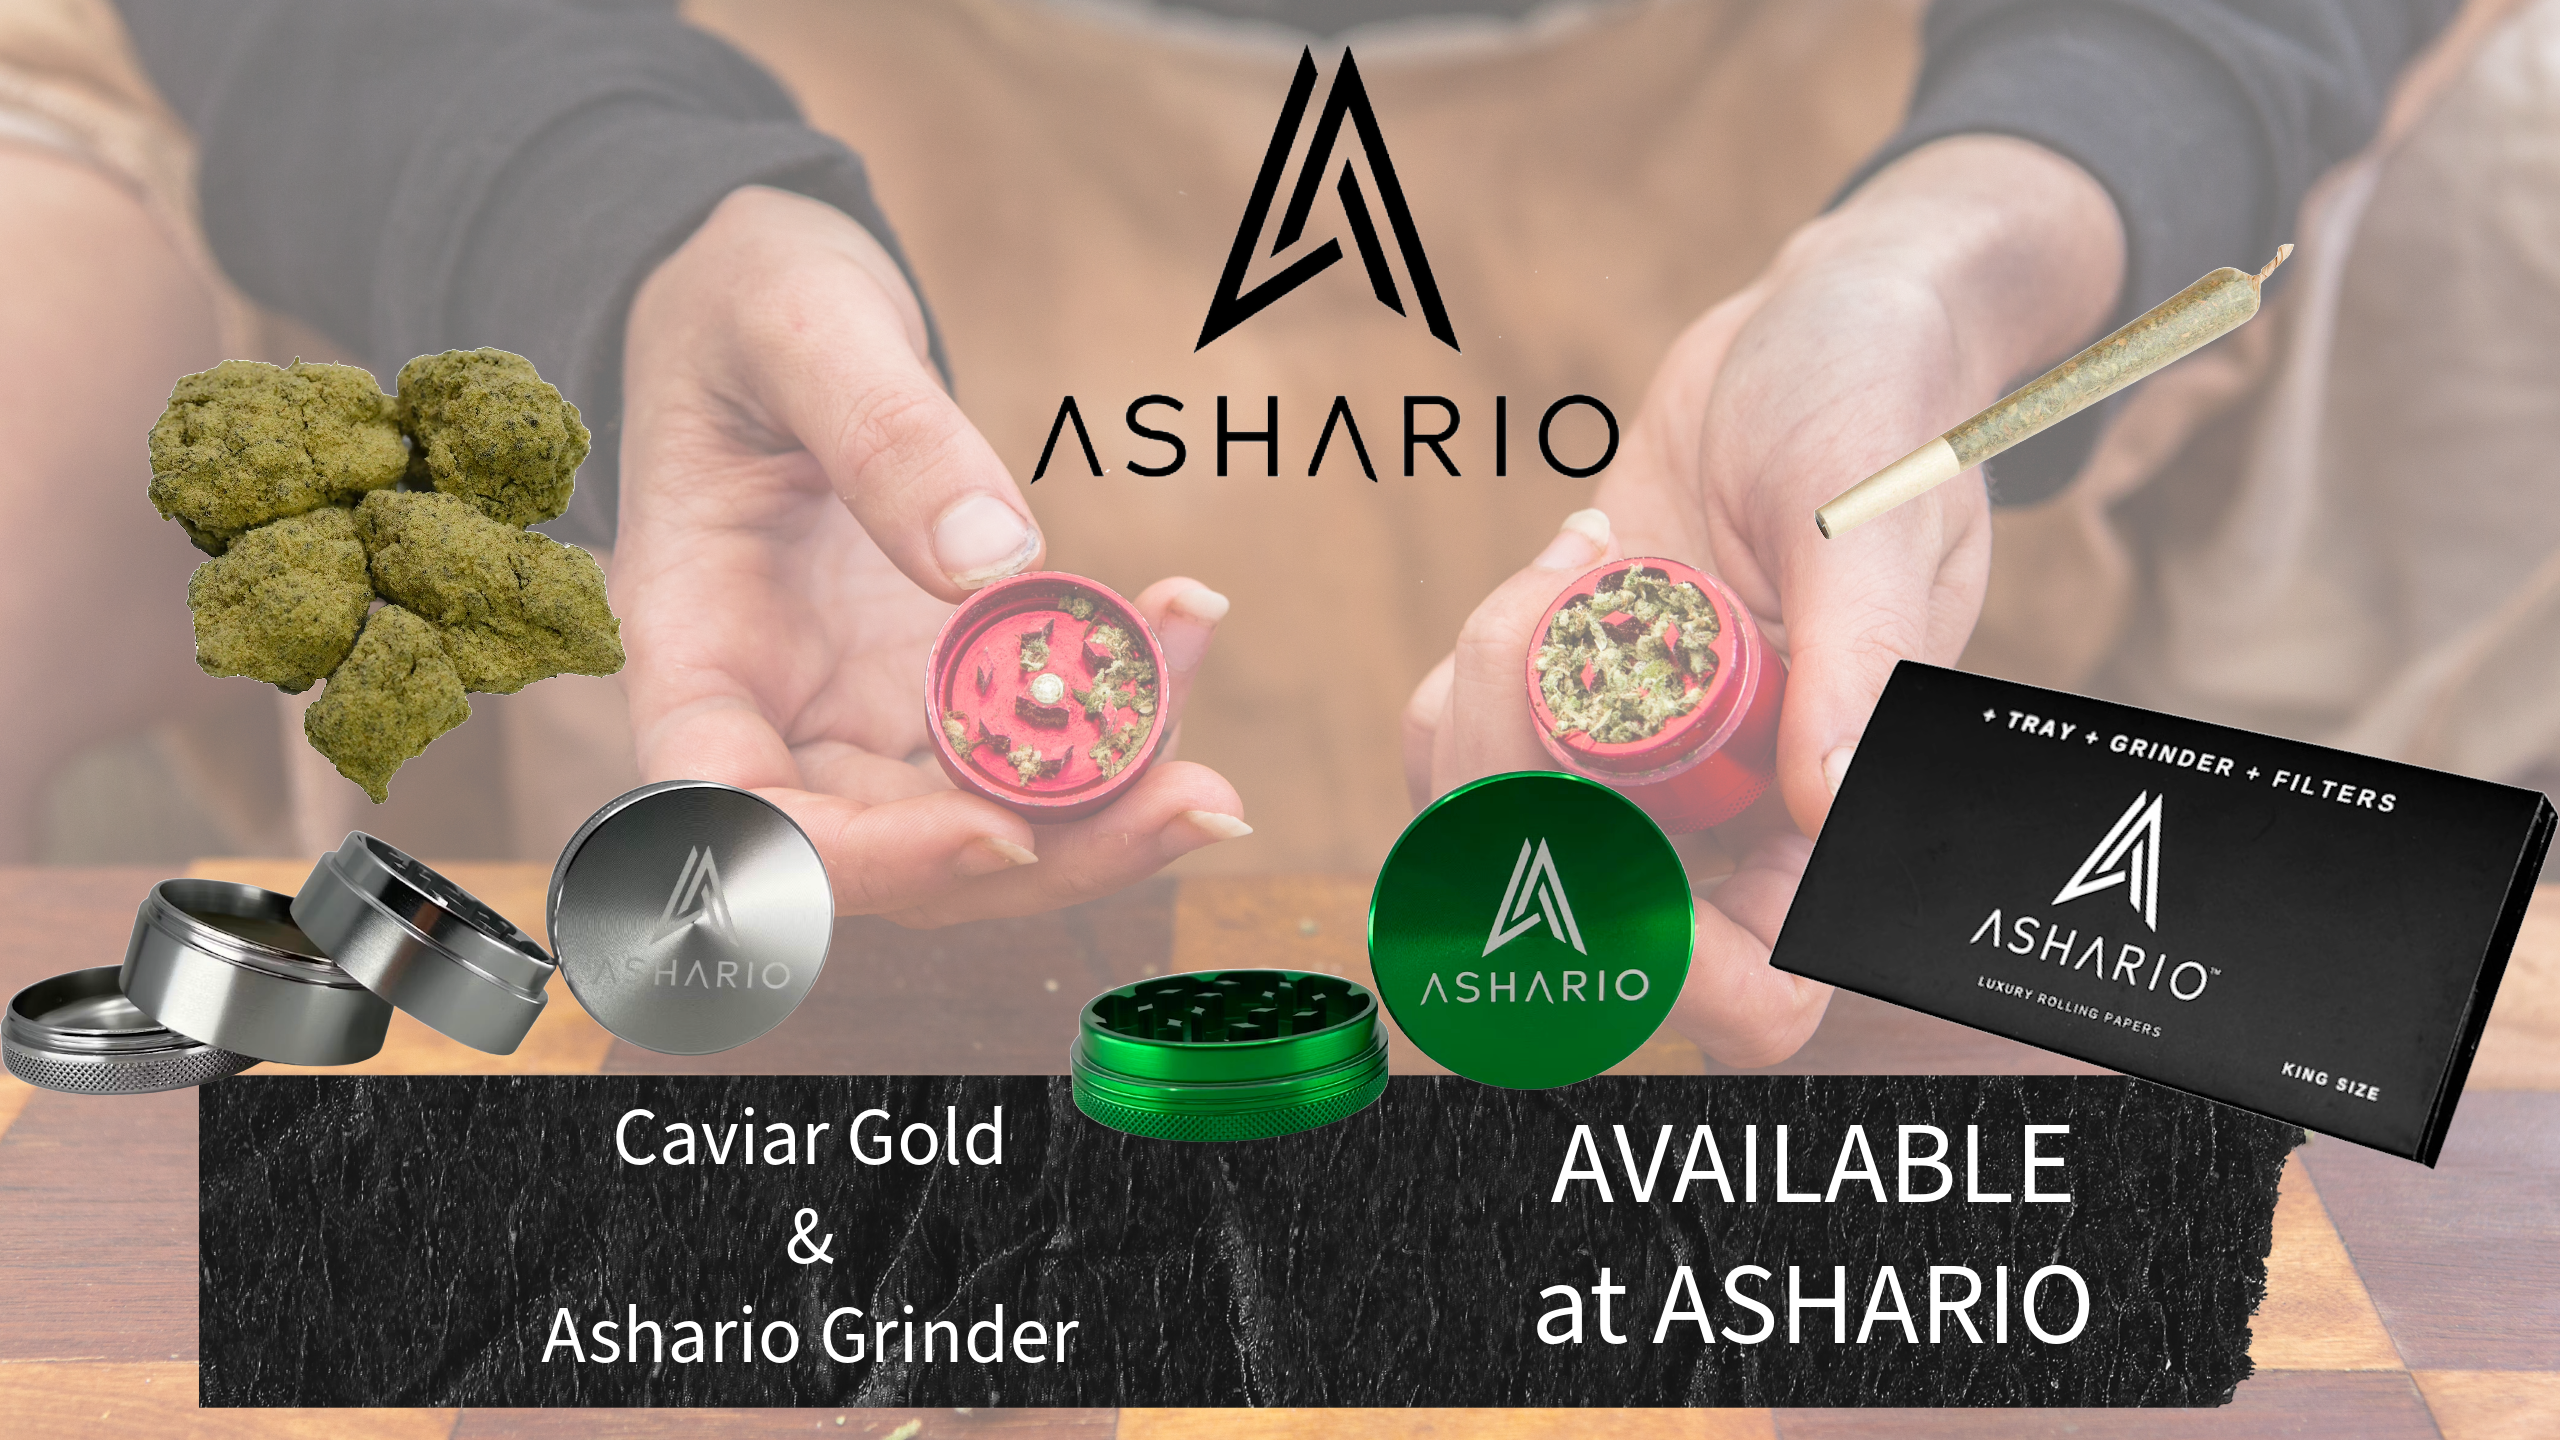 Caviar Gold - The Gold Standard in Recreational Cannabis